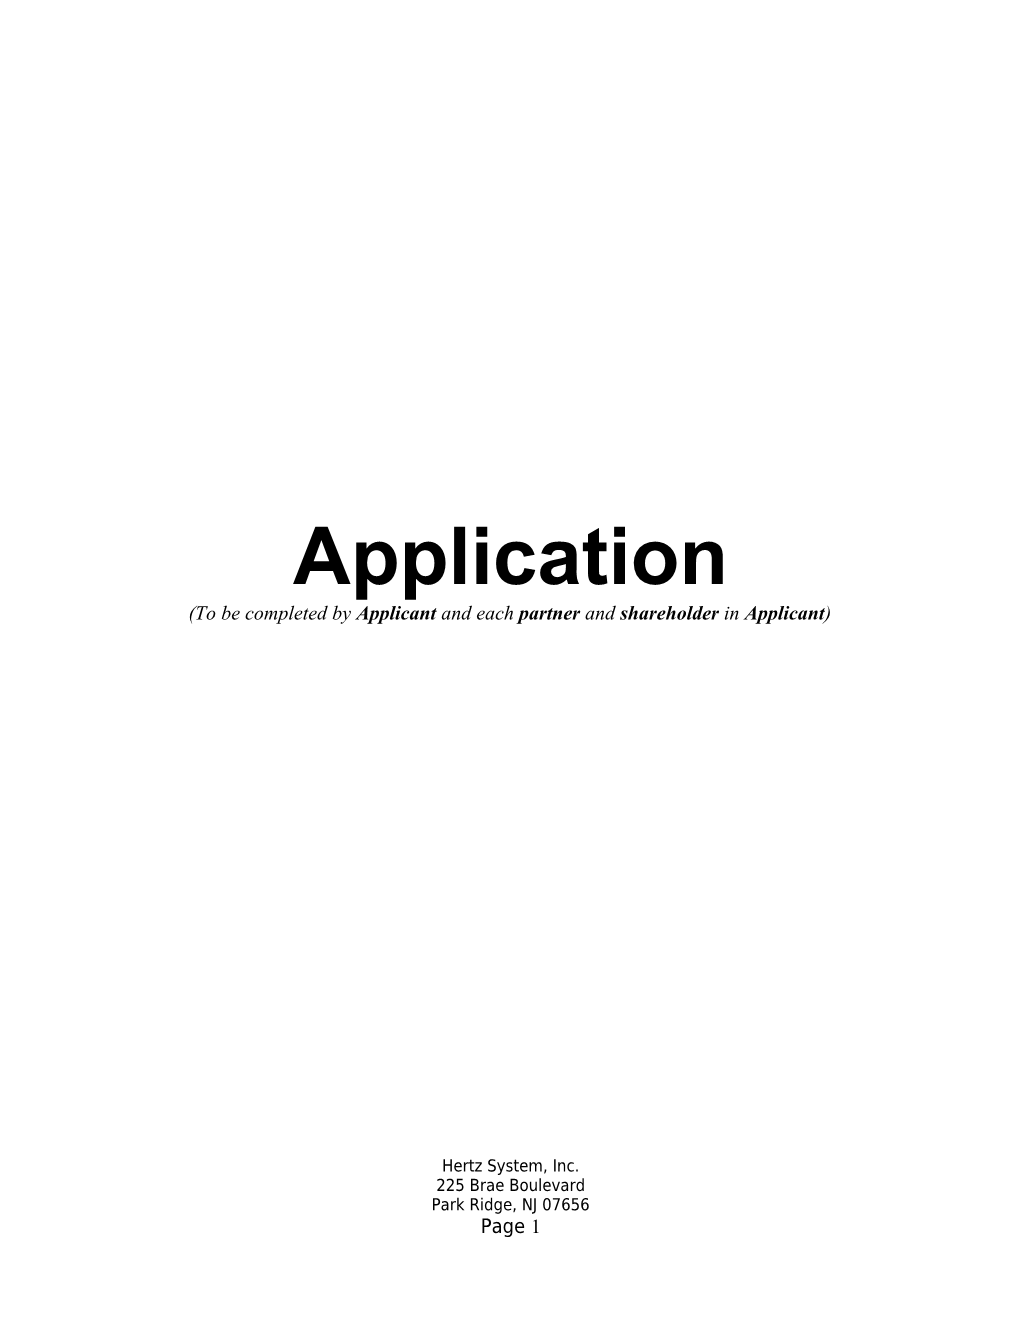 Sample Franchise Application Package